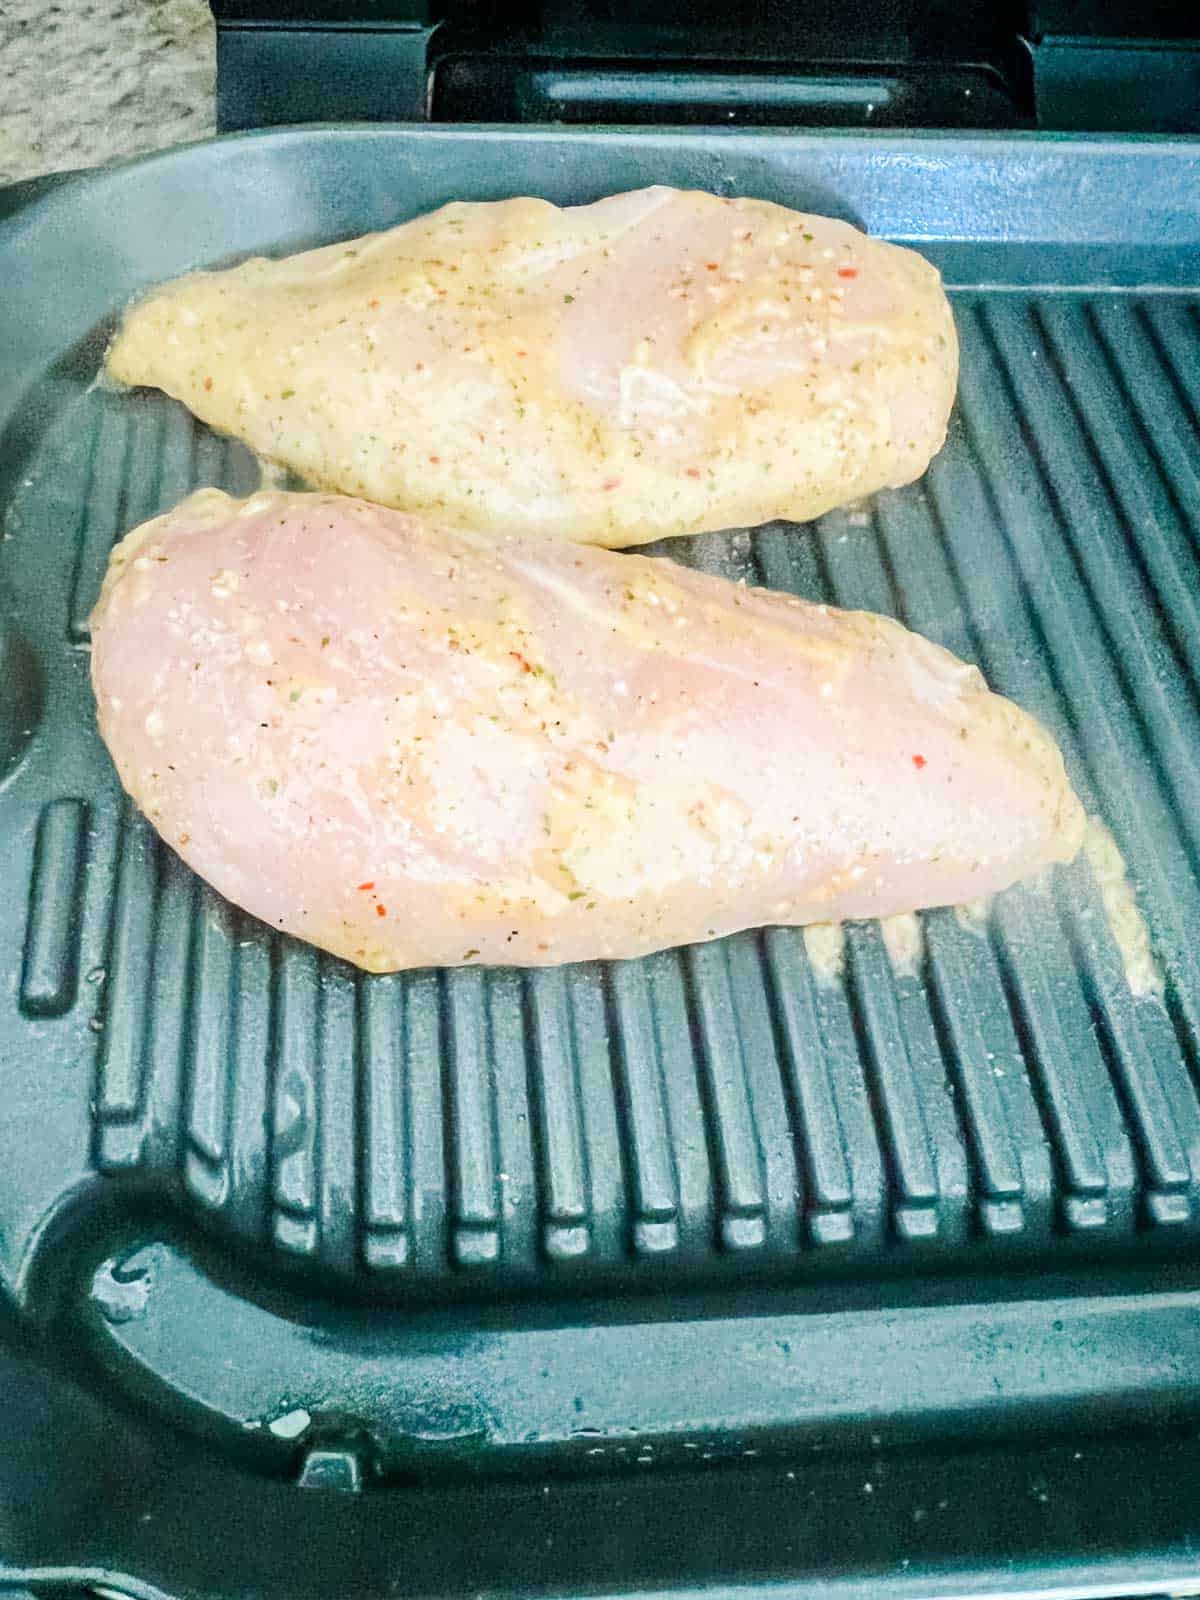 Chicken breast cooking on a Ninja Foodi grill.